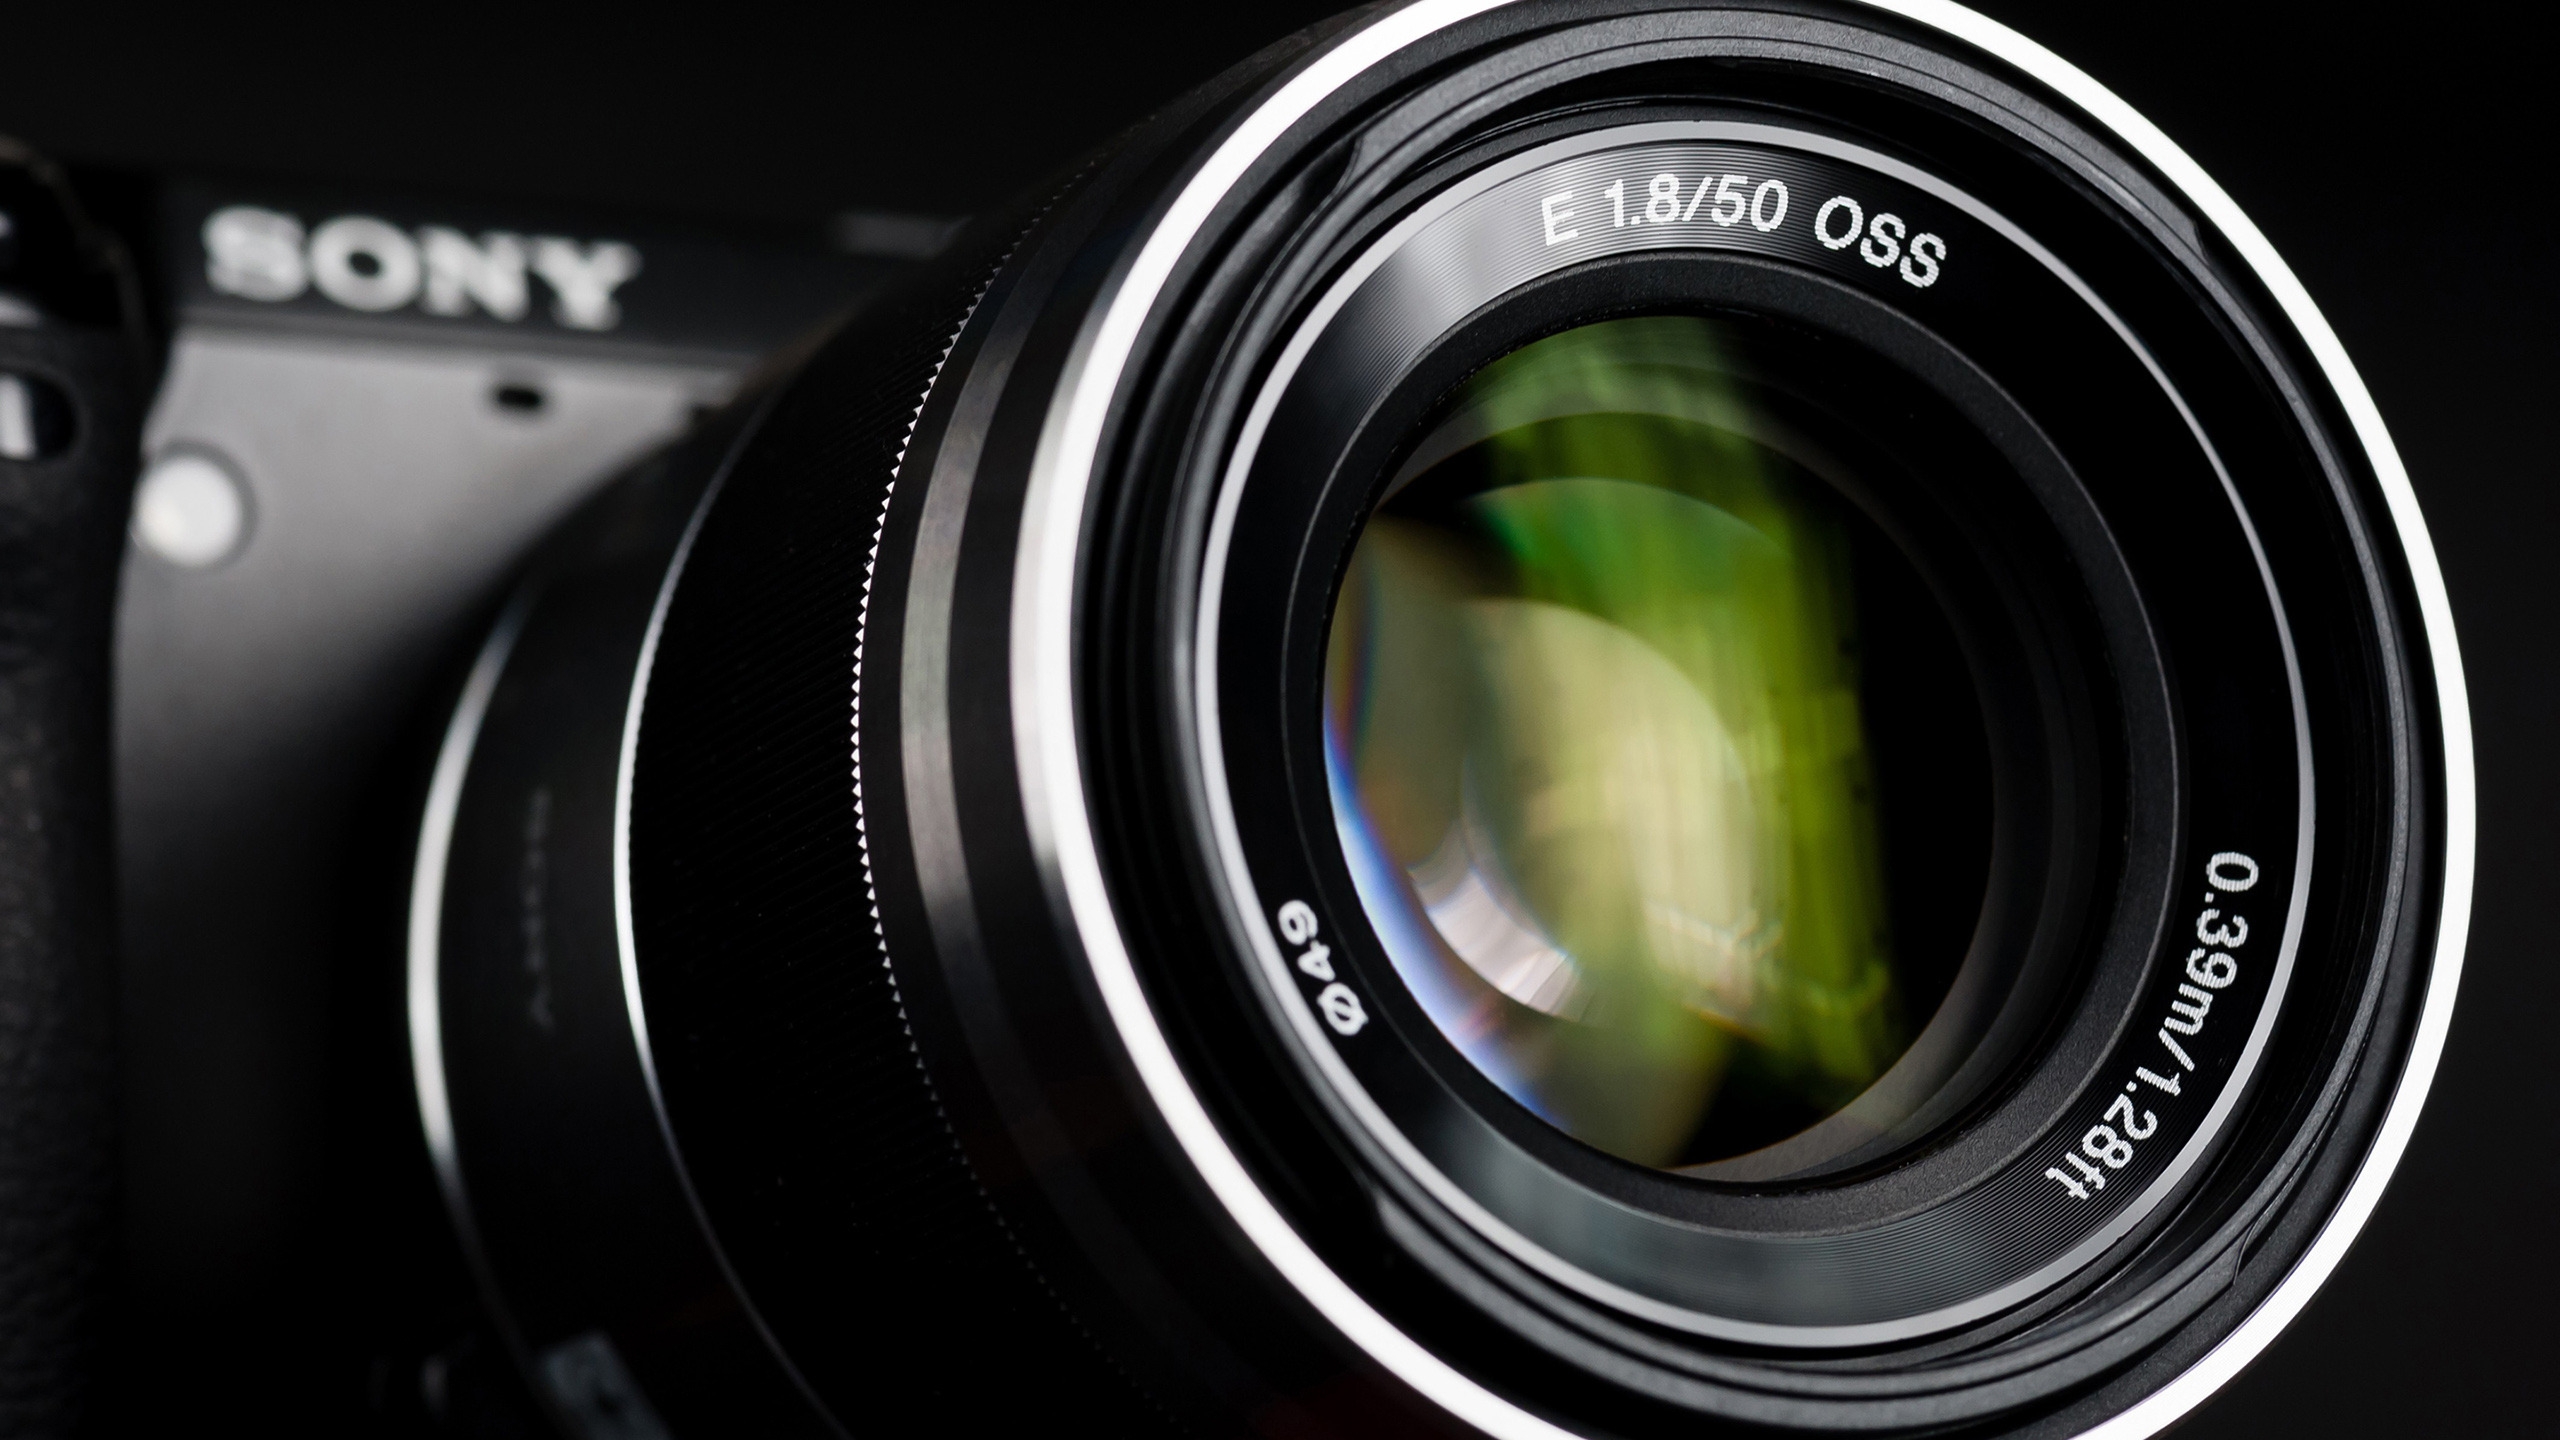 Sony Camera Lens for 2560x1440 HDTV resolution